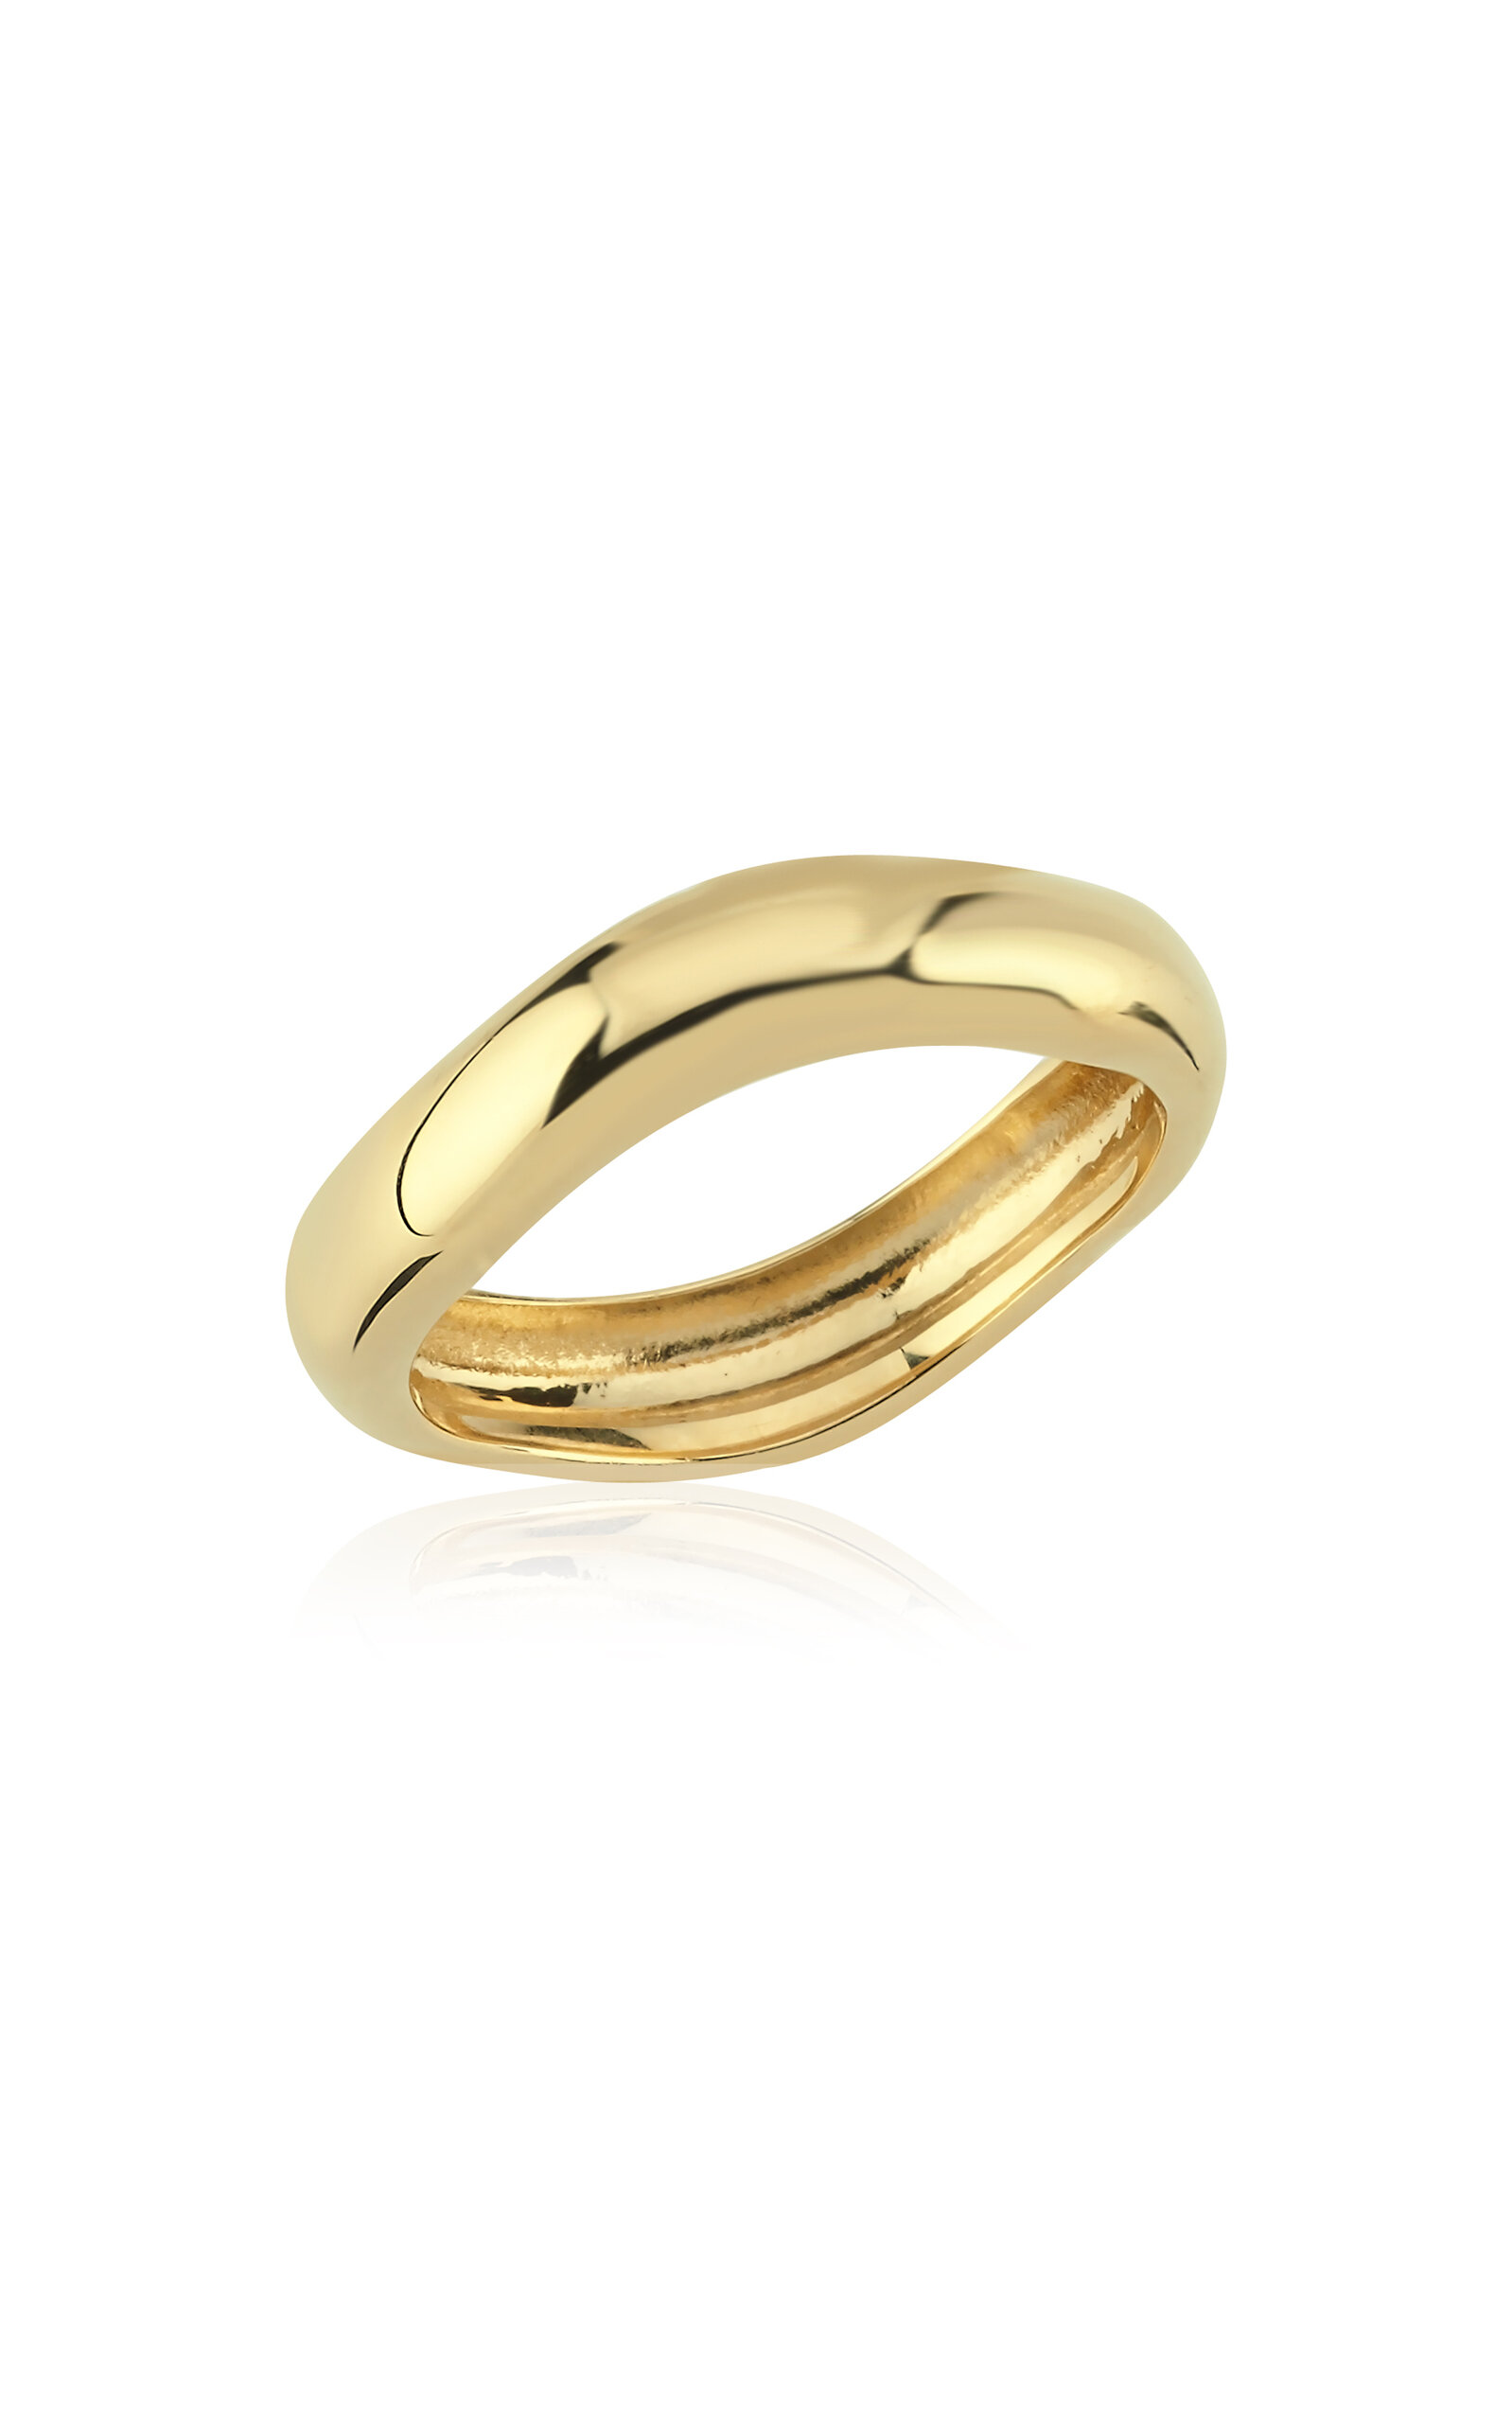 Charms Company Women's Rebellion 14K Yellow Gold Ring